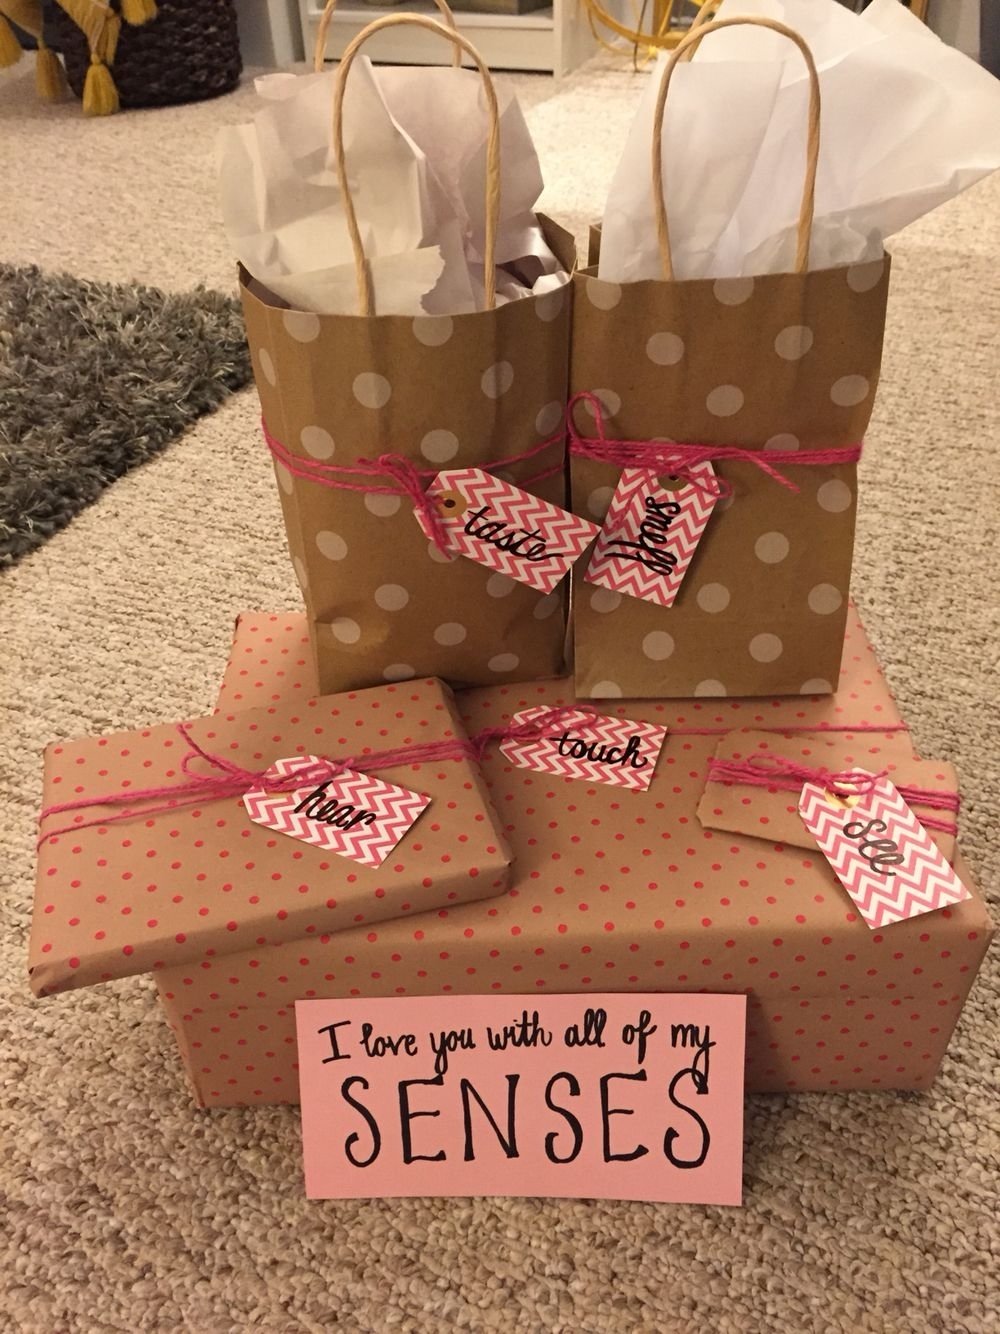 10 Lovable Romantic Birthday Gift Ideas Boyfriend 5 senses valentines day gift stuff for cody pinterest gift 2023